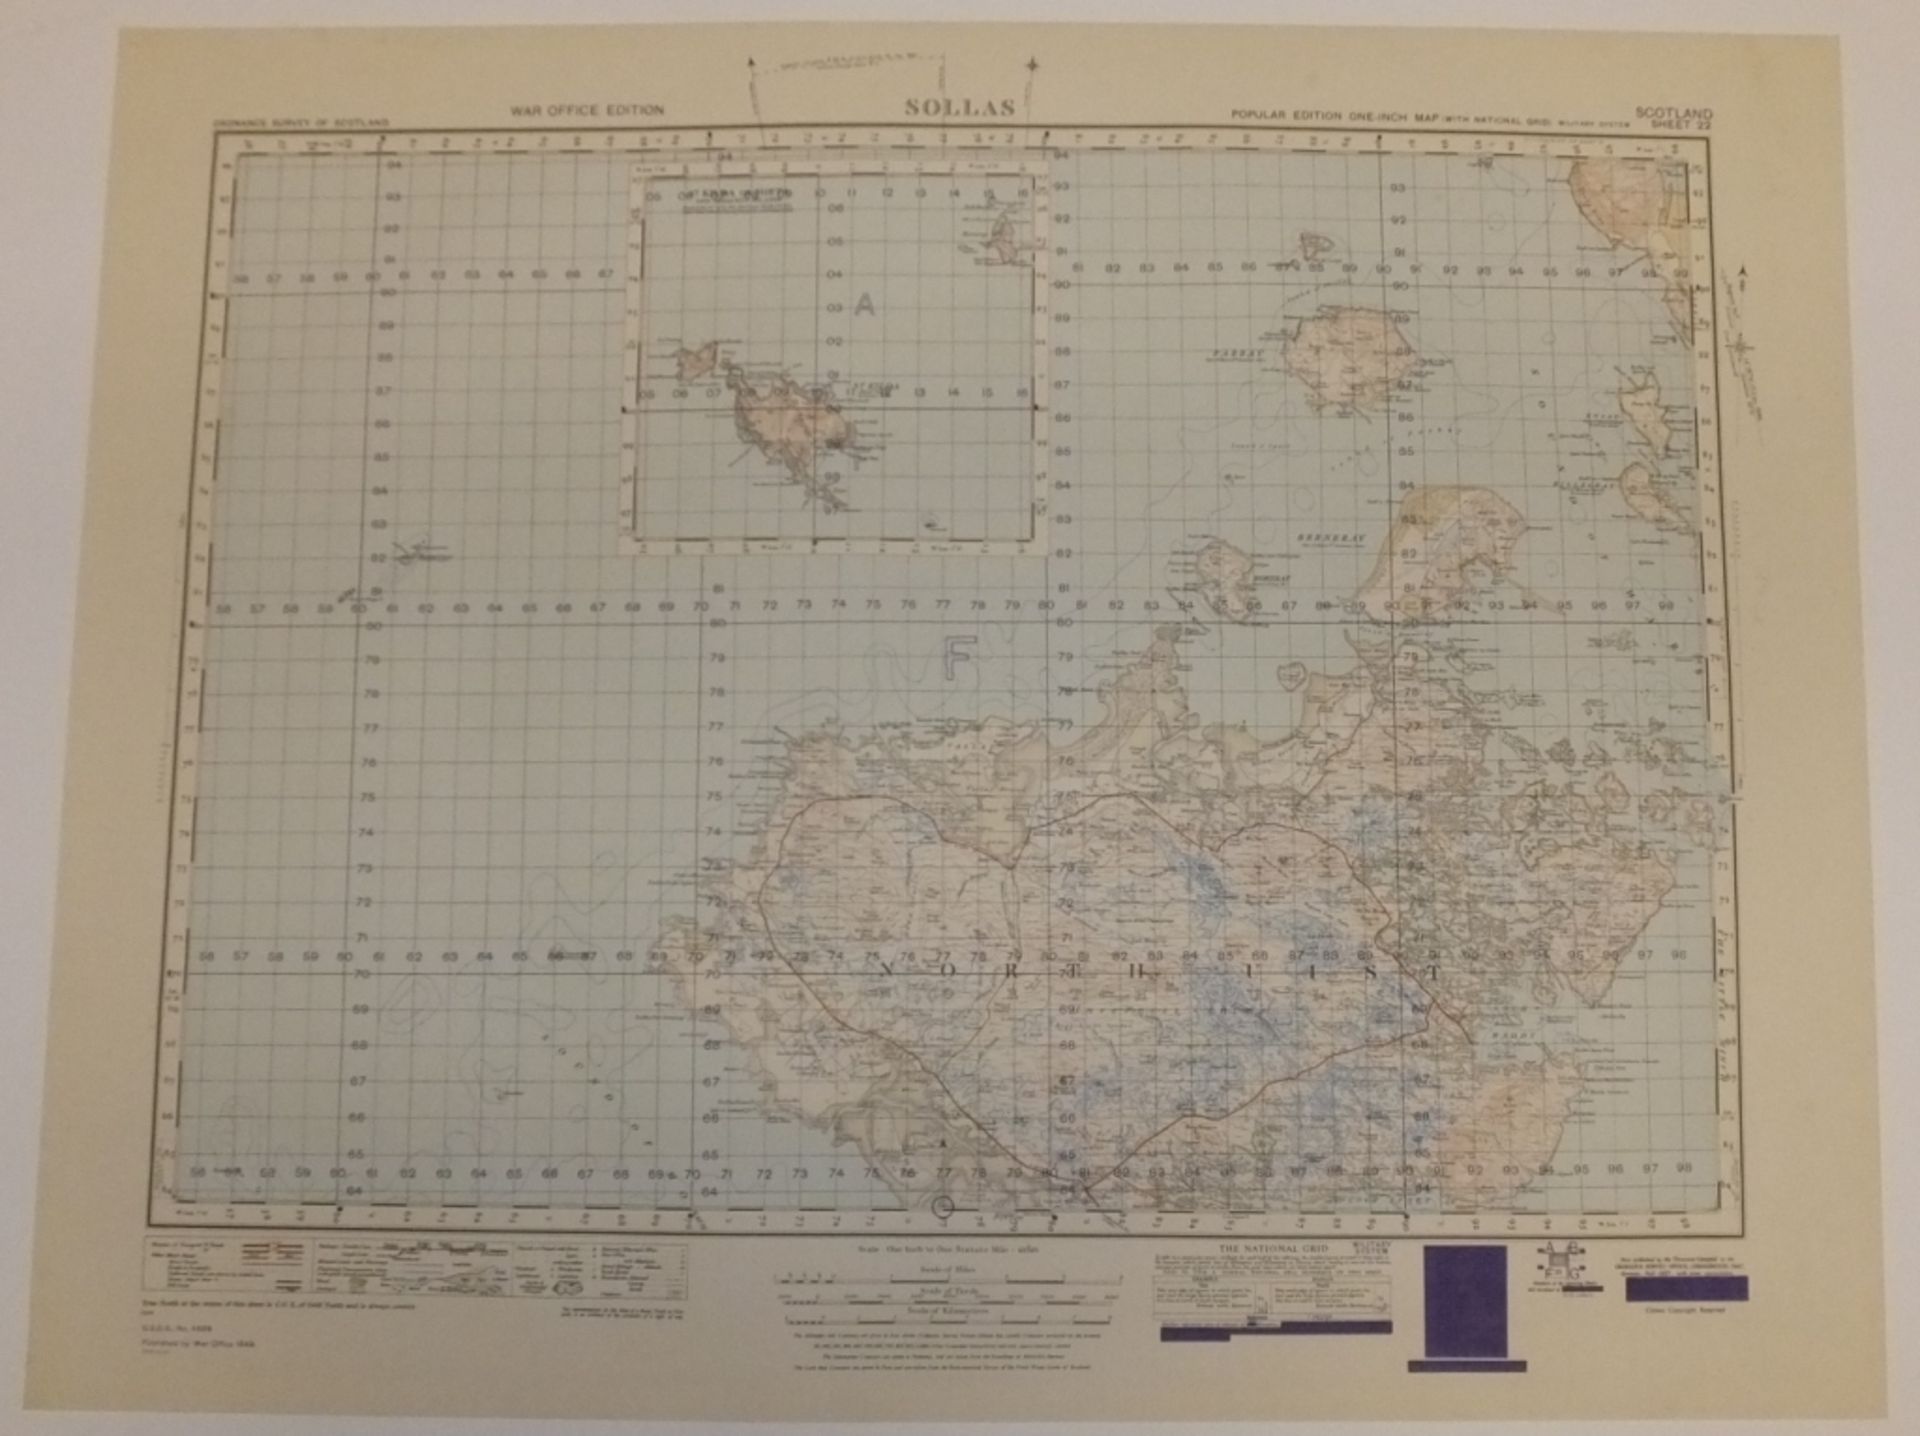 29x SCOTLAND MAP SOLLAS 1INCH 1MILE 1949 POPULAR EDITION 4639GSGS SHEET 22